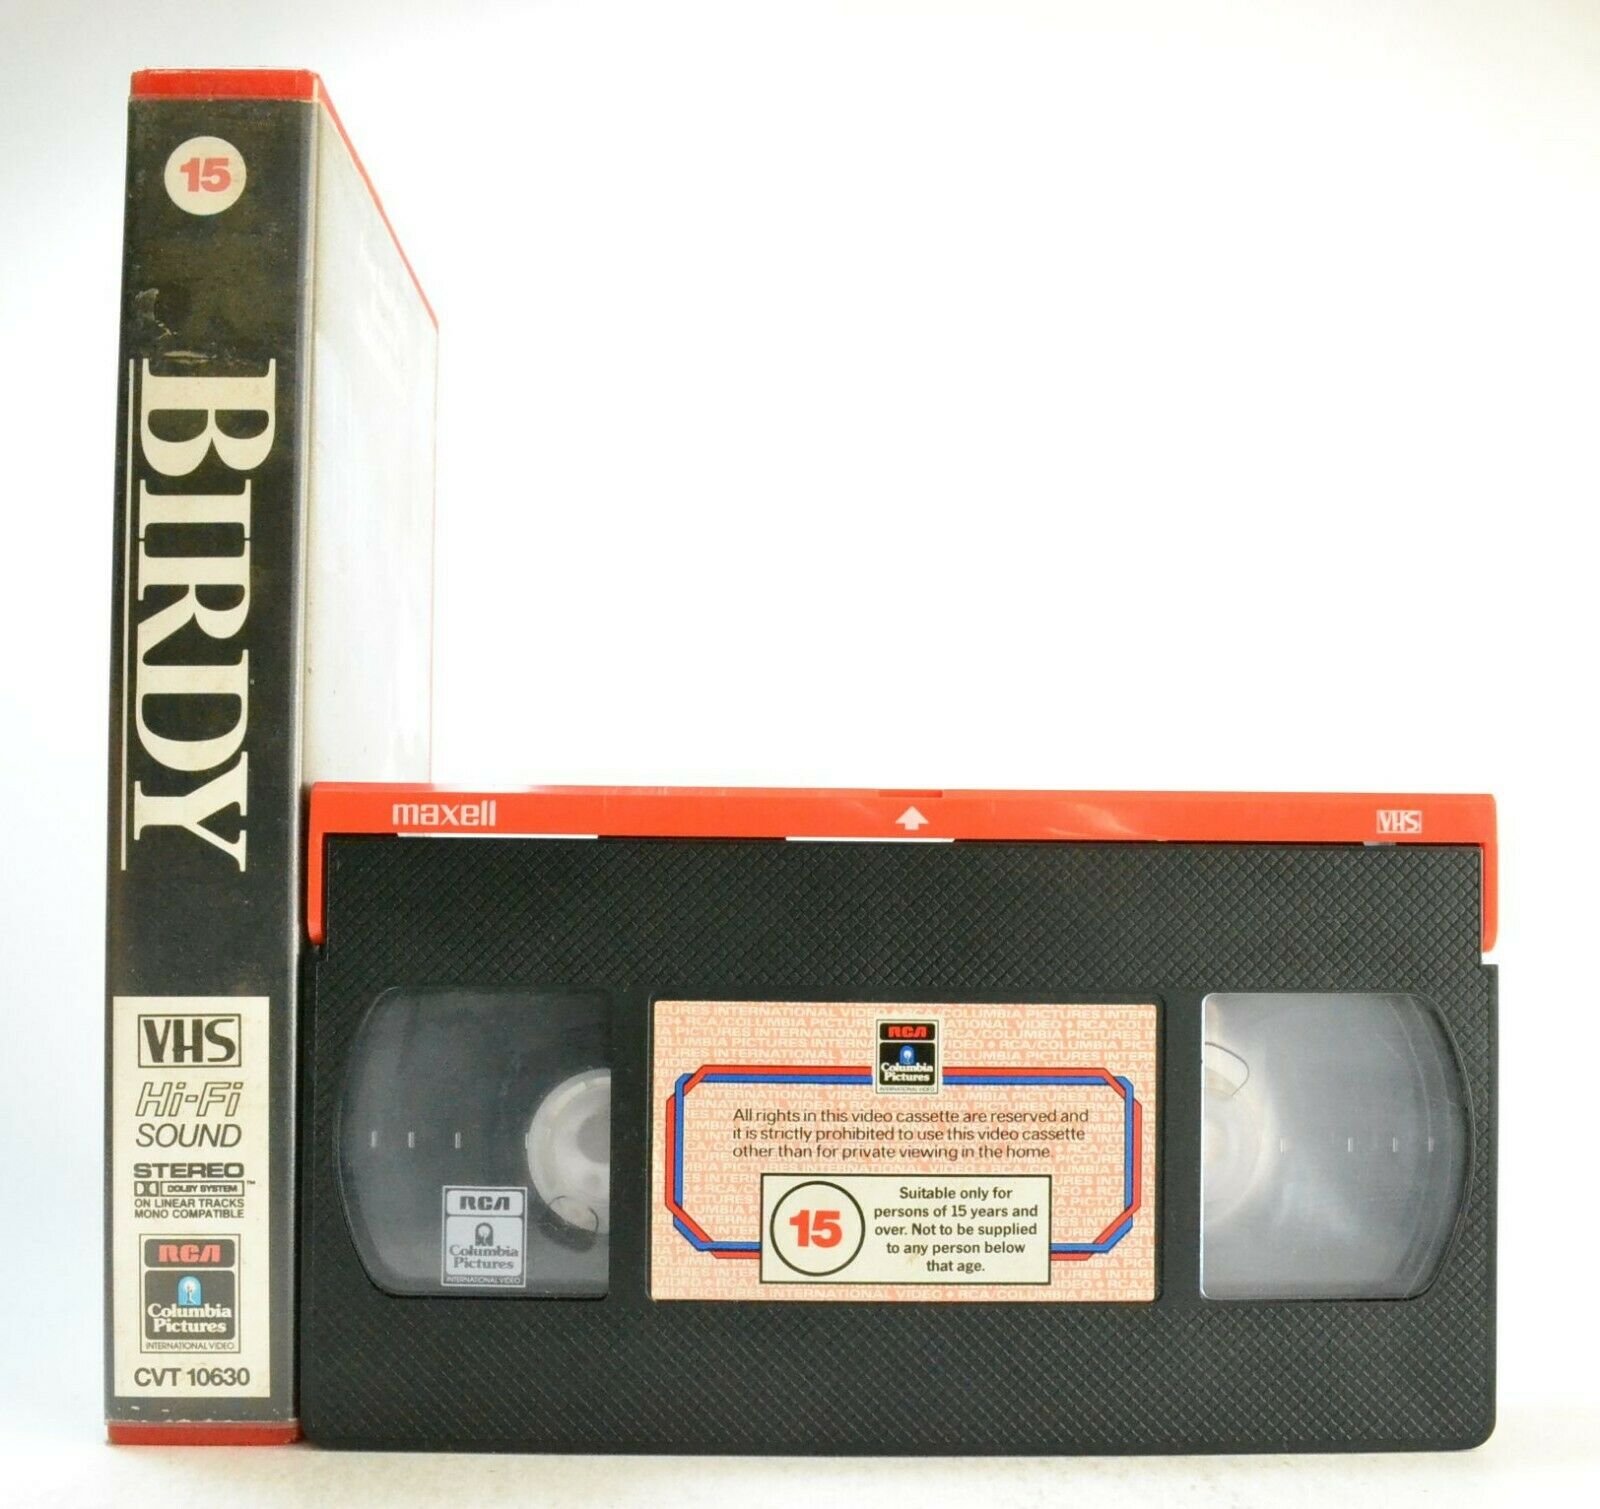 Birdy: Based On W.Wharton Novel - Drama (1984) - Large Box - Nicolas Cage - VHS-